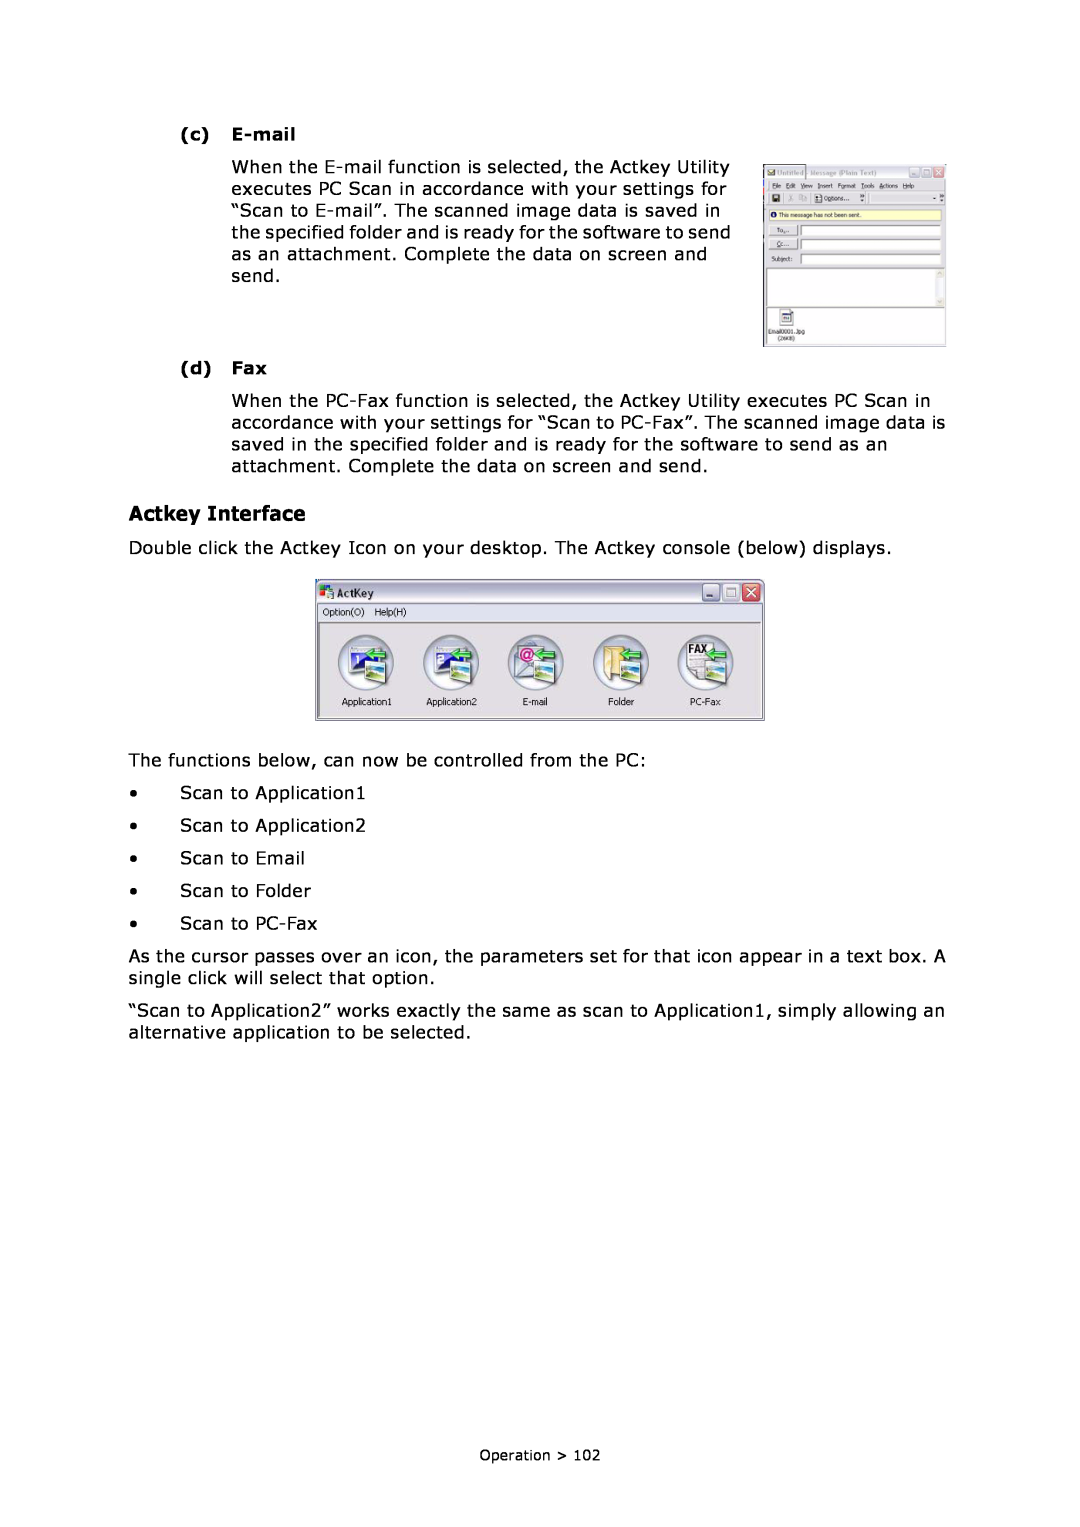 Oki MC860n MFP manual Actkey Interface, c E-mail, d Fax 